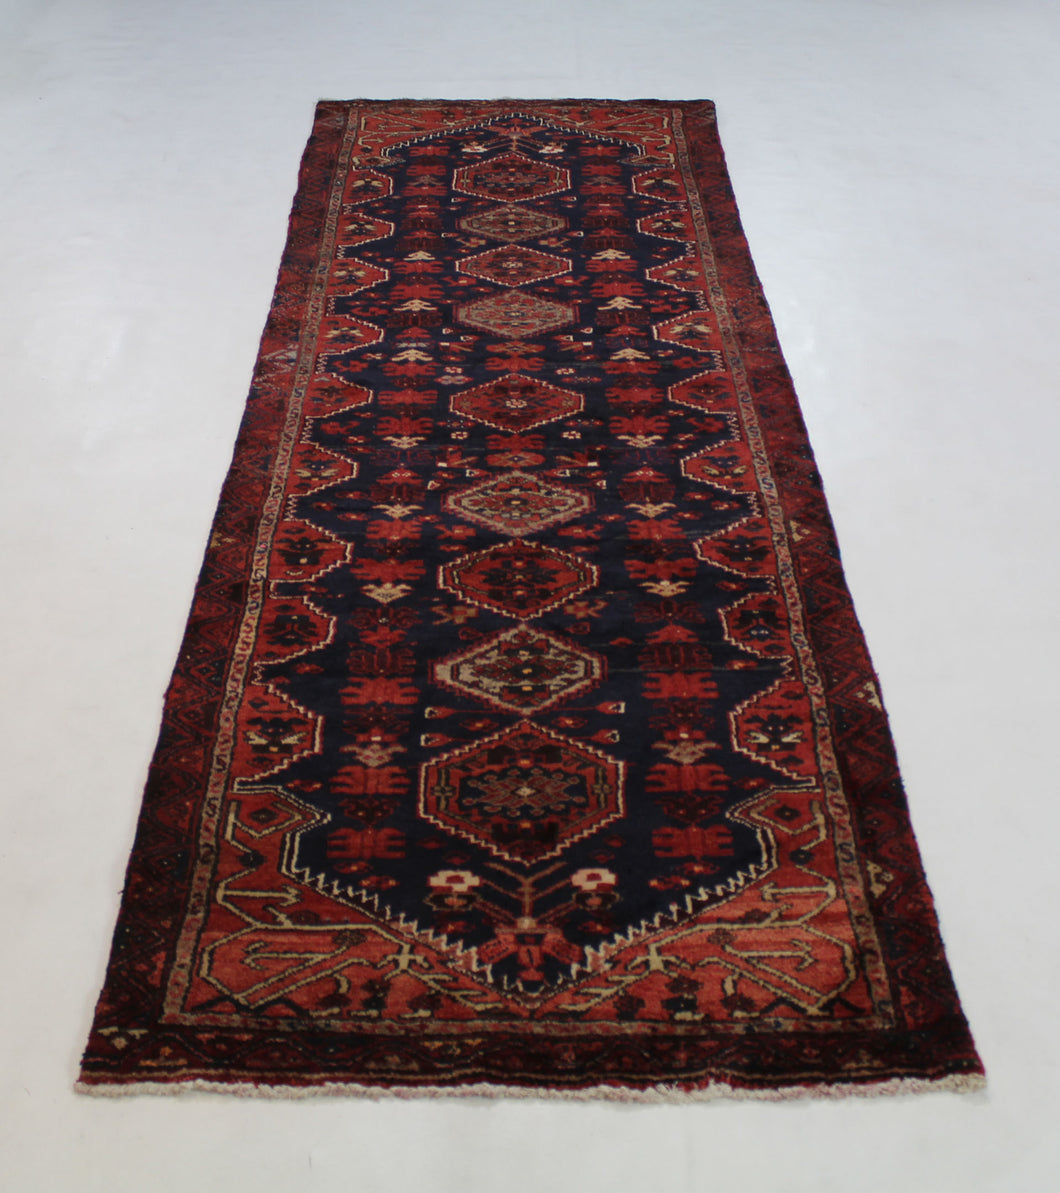 Handmade Antique, Vintage oriental Persian Hamedan rug - 290 X 95 cm